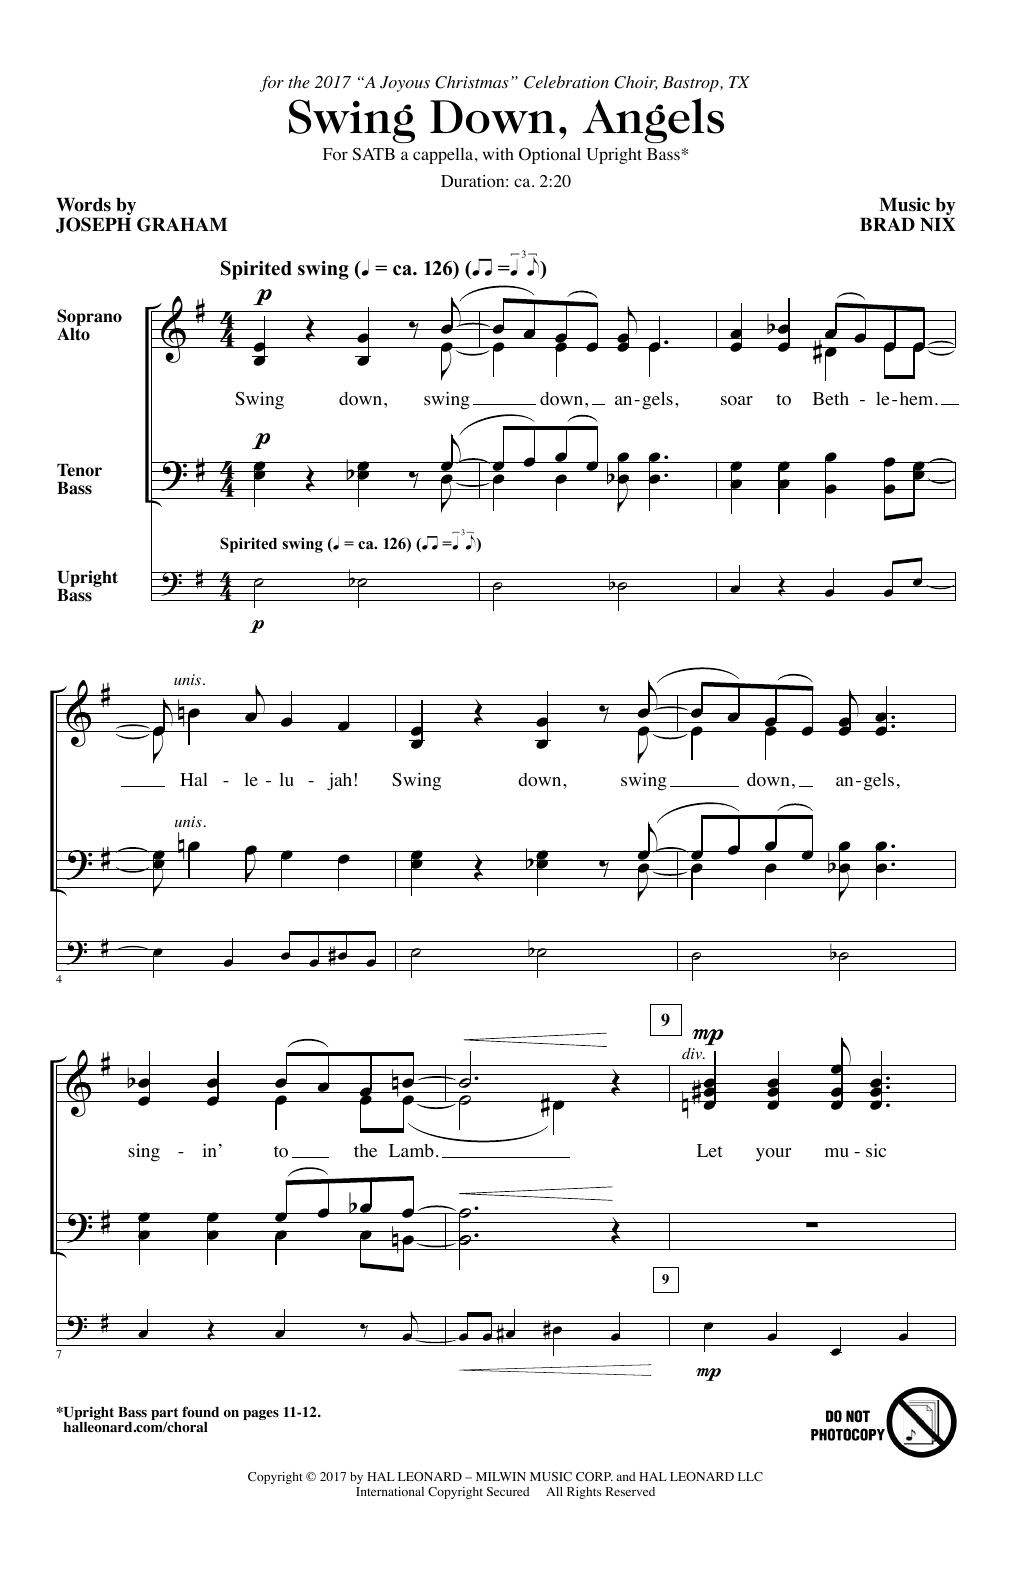 Brad Nix Swing Down, Angels Sheet Music Notes & Chords for SATB - Download or Print PDF